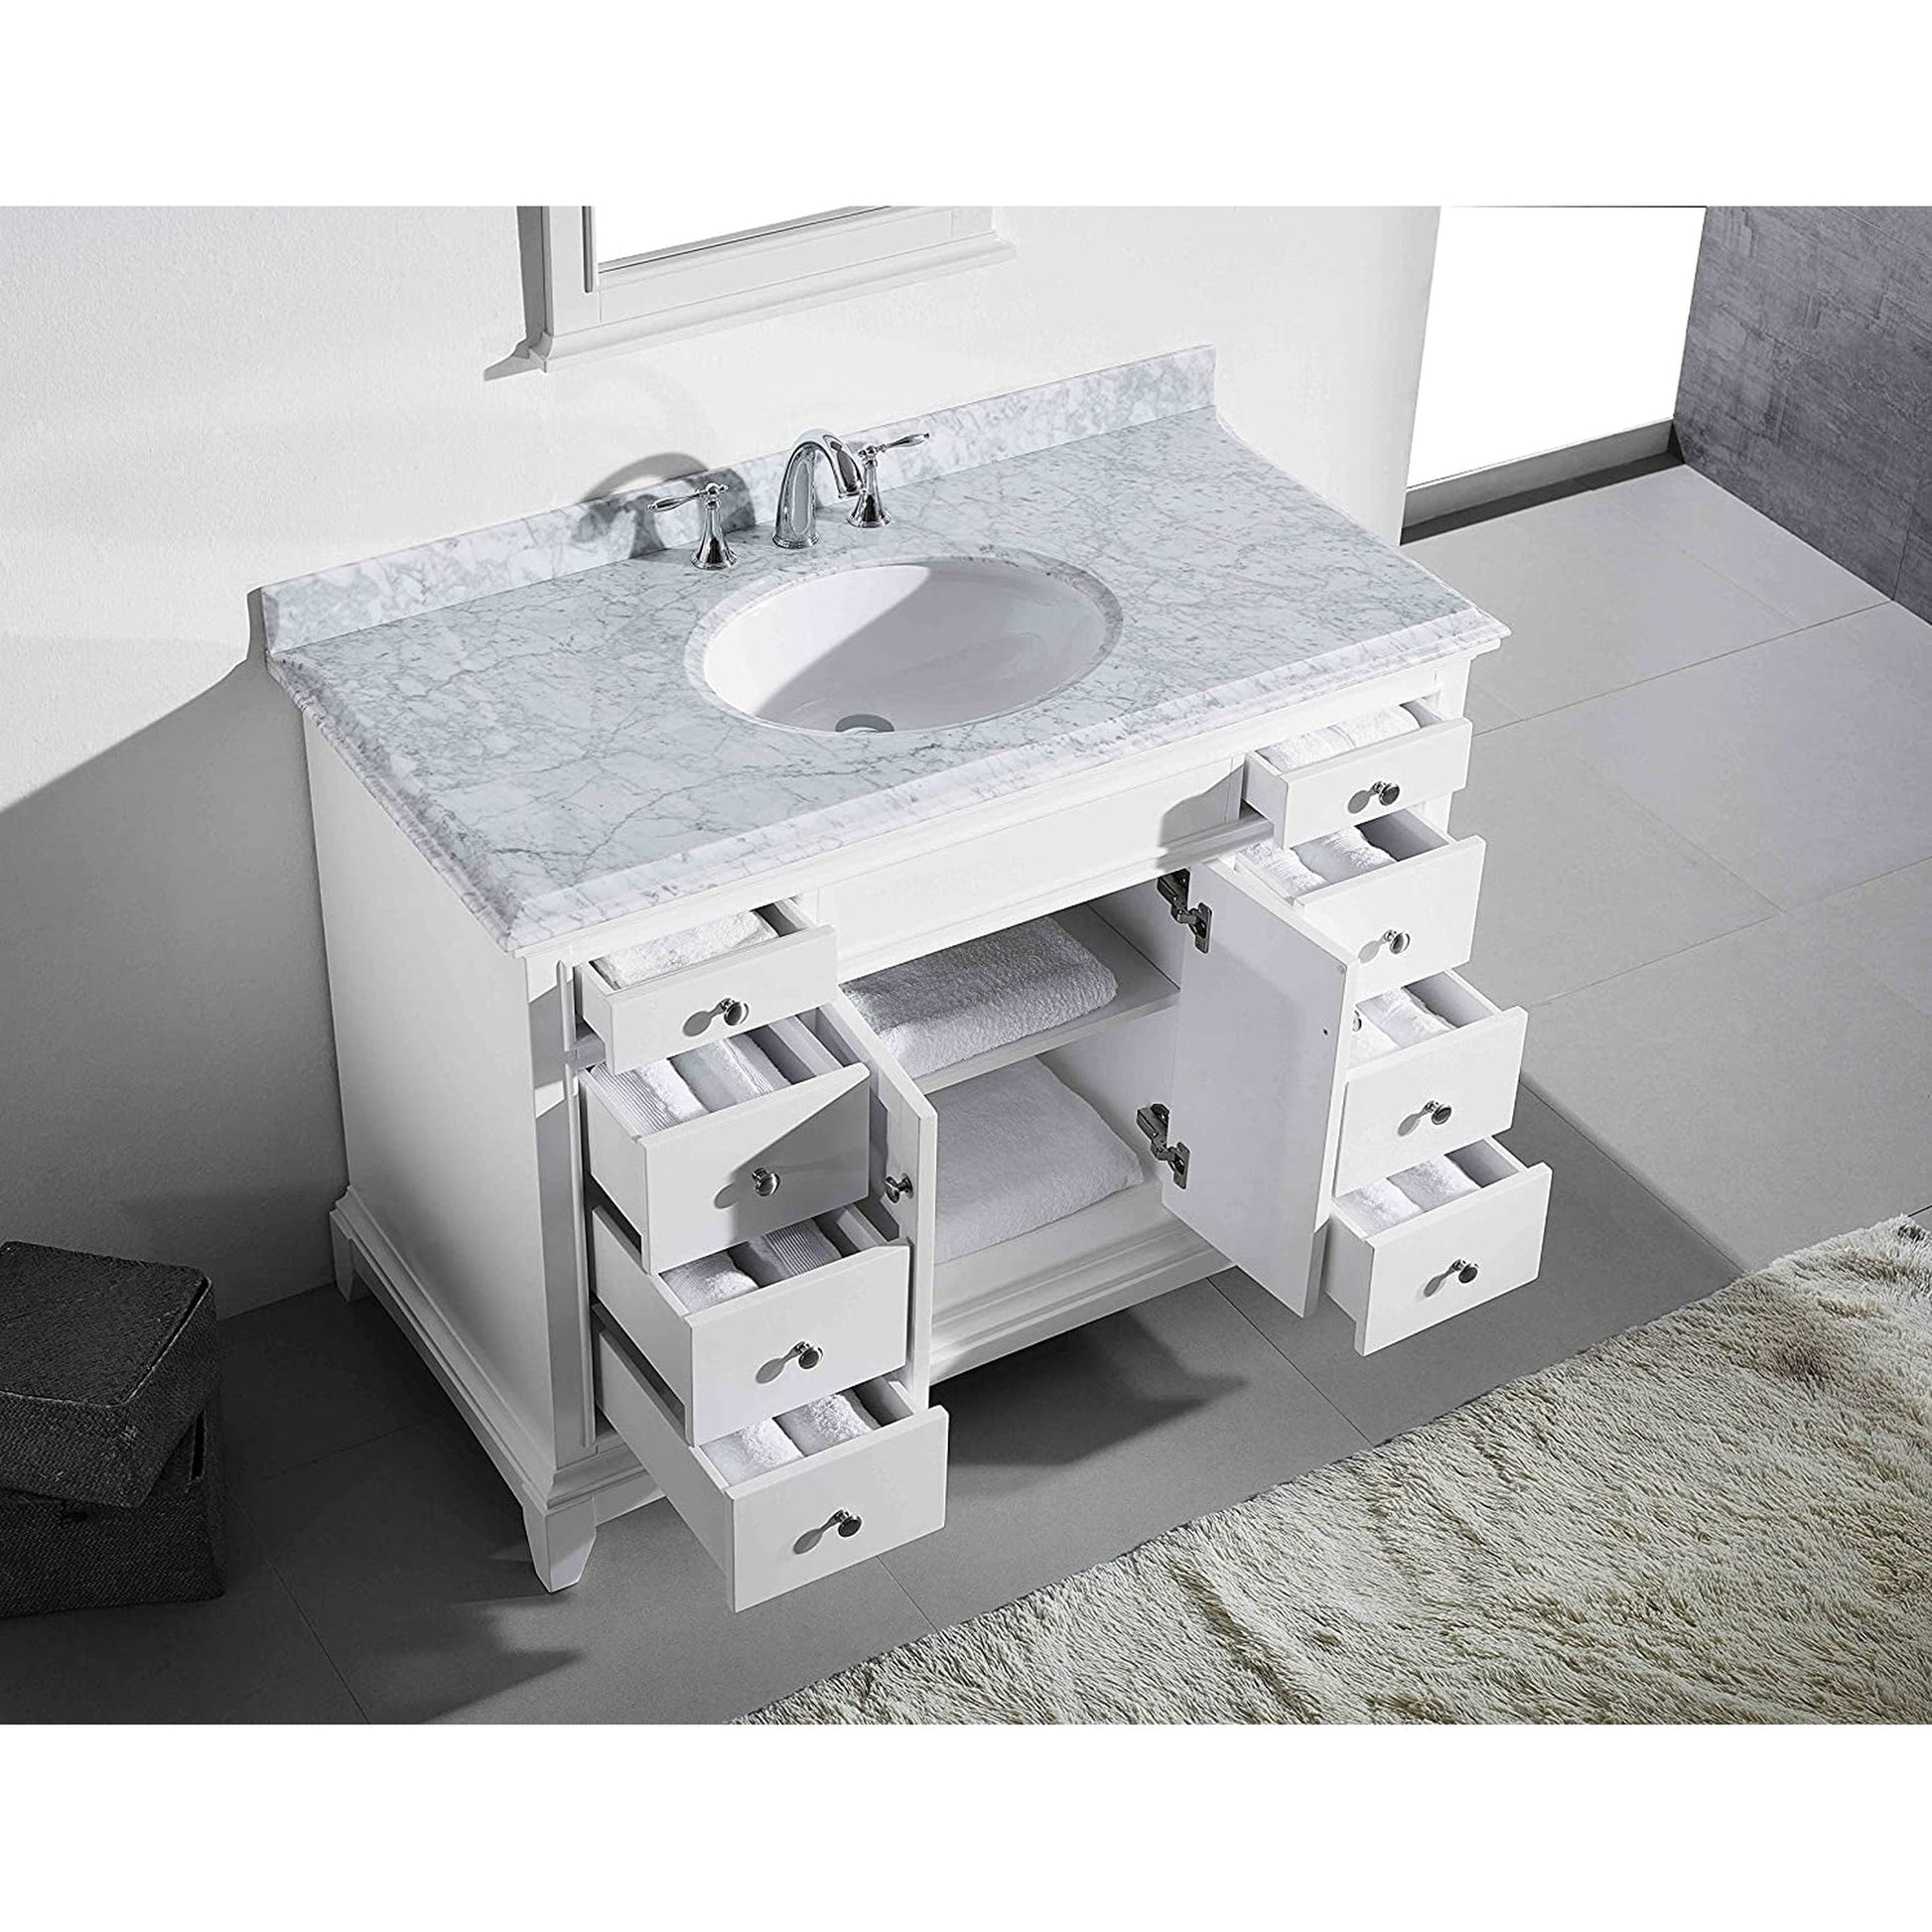 Eviva Elite Stamford 48" x 36" White Freestanding Bathroom Vanity With White Carrara Marble Countertop and Undermount Porcelain Sink